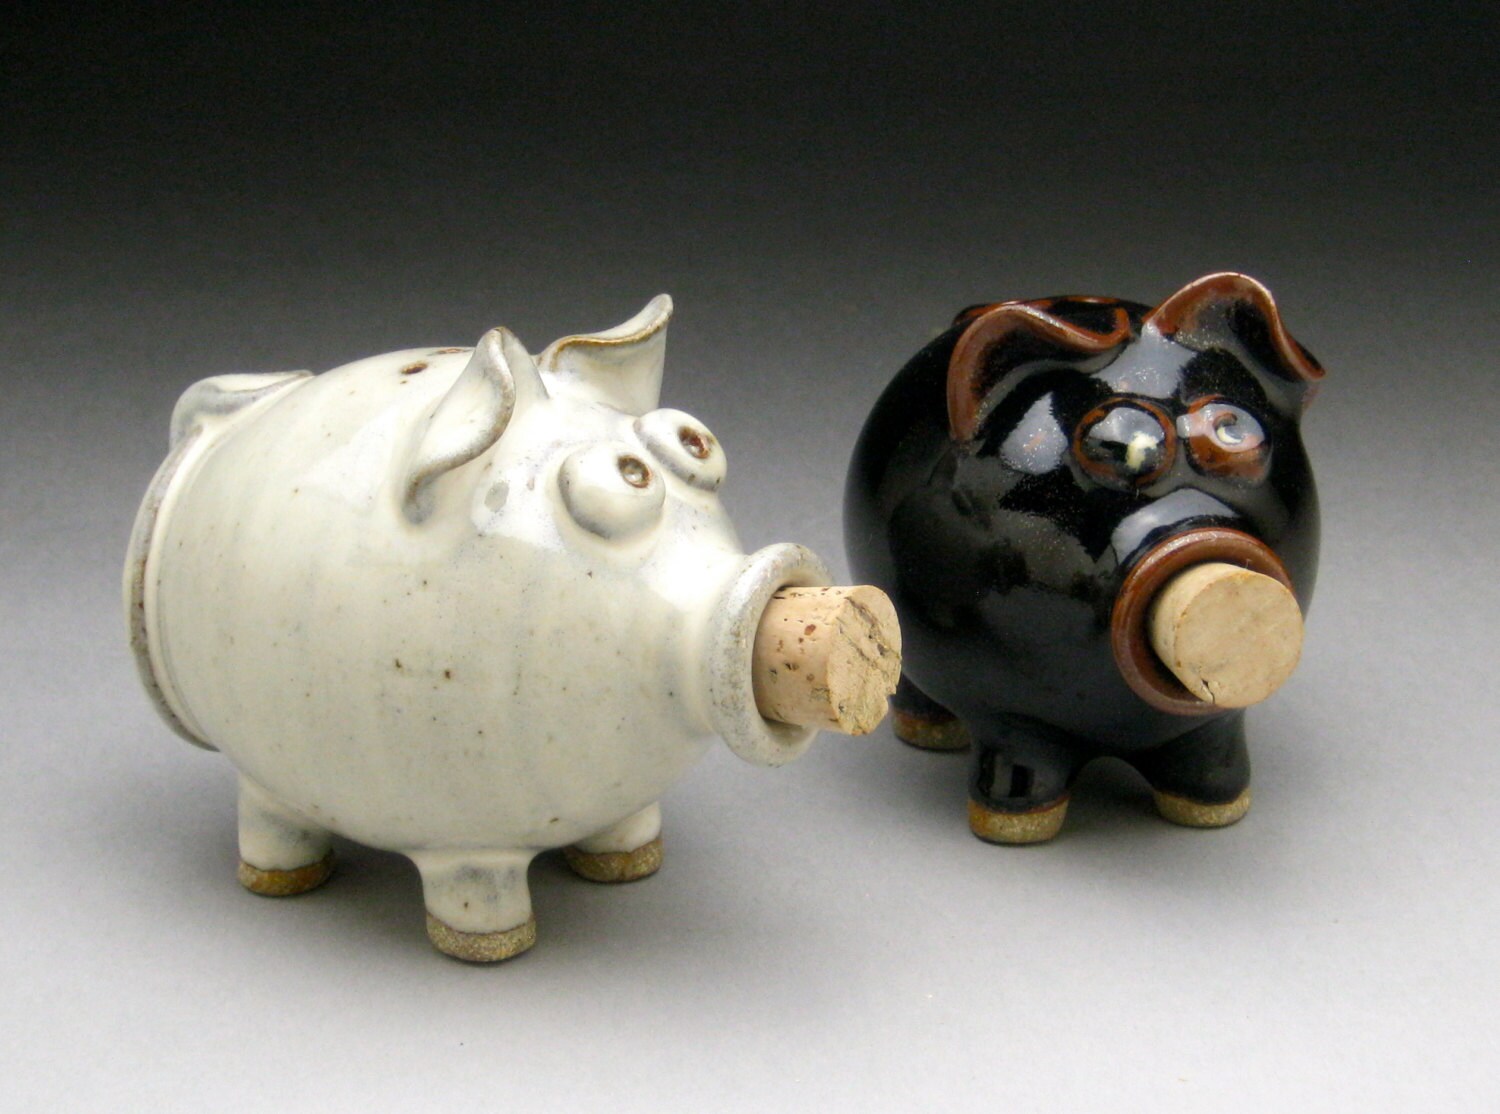 Hog Heaven Pigs with Wings Ceramic Magnetic Salt and Pepper Shaker Set